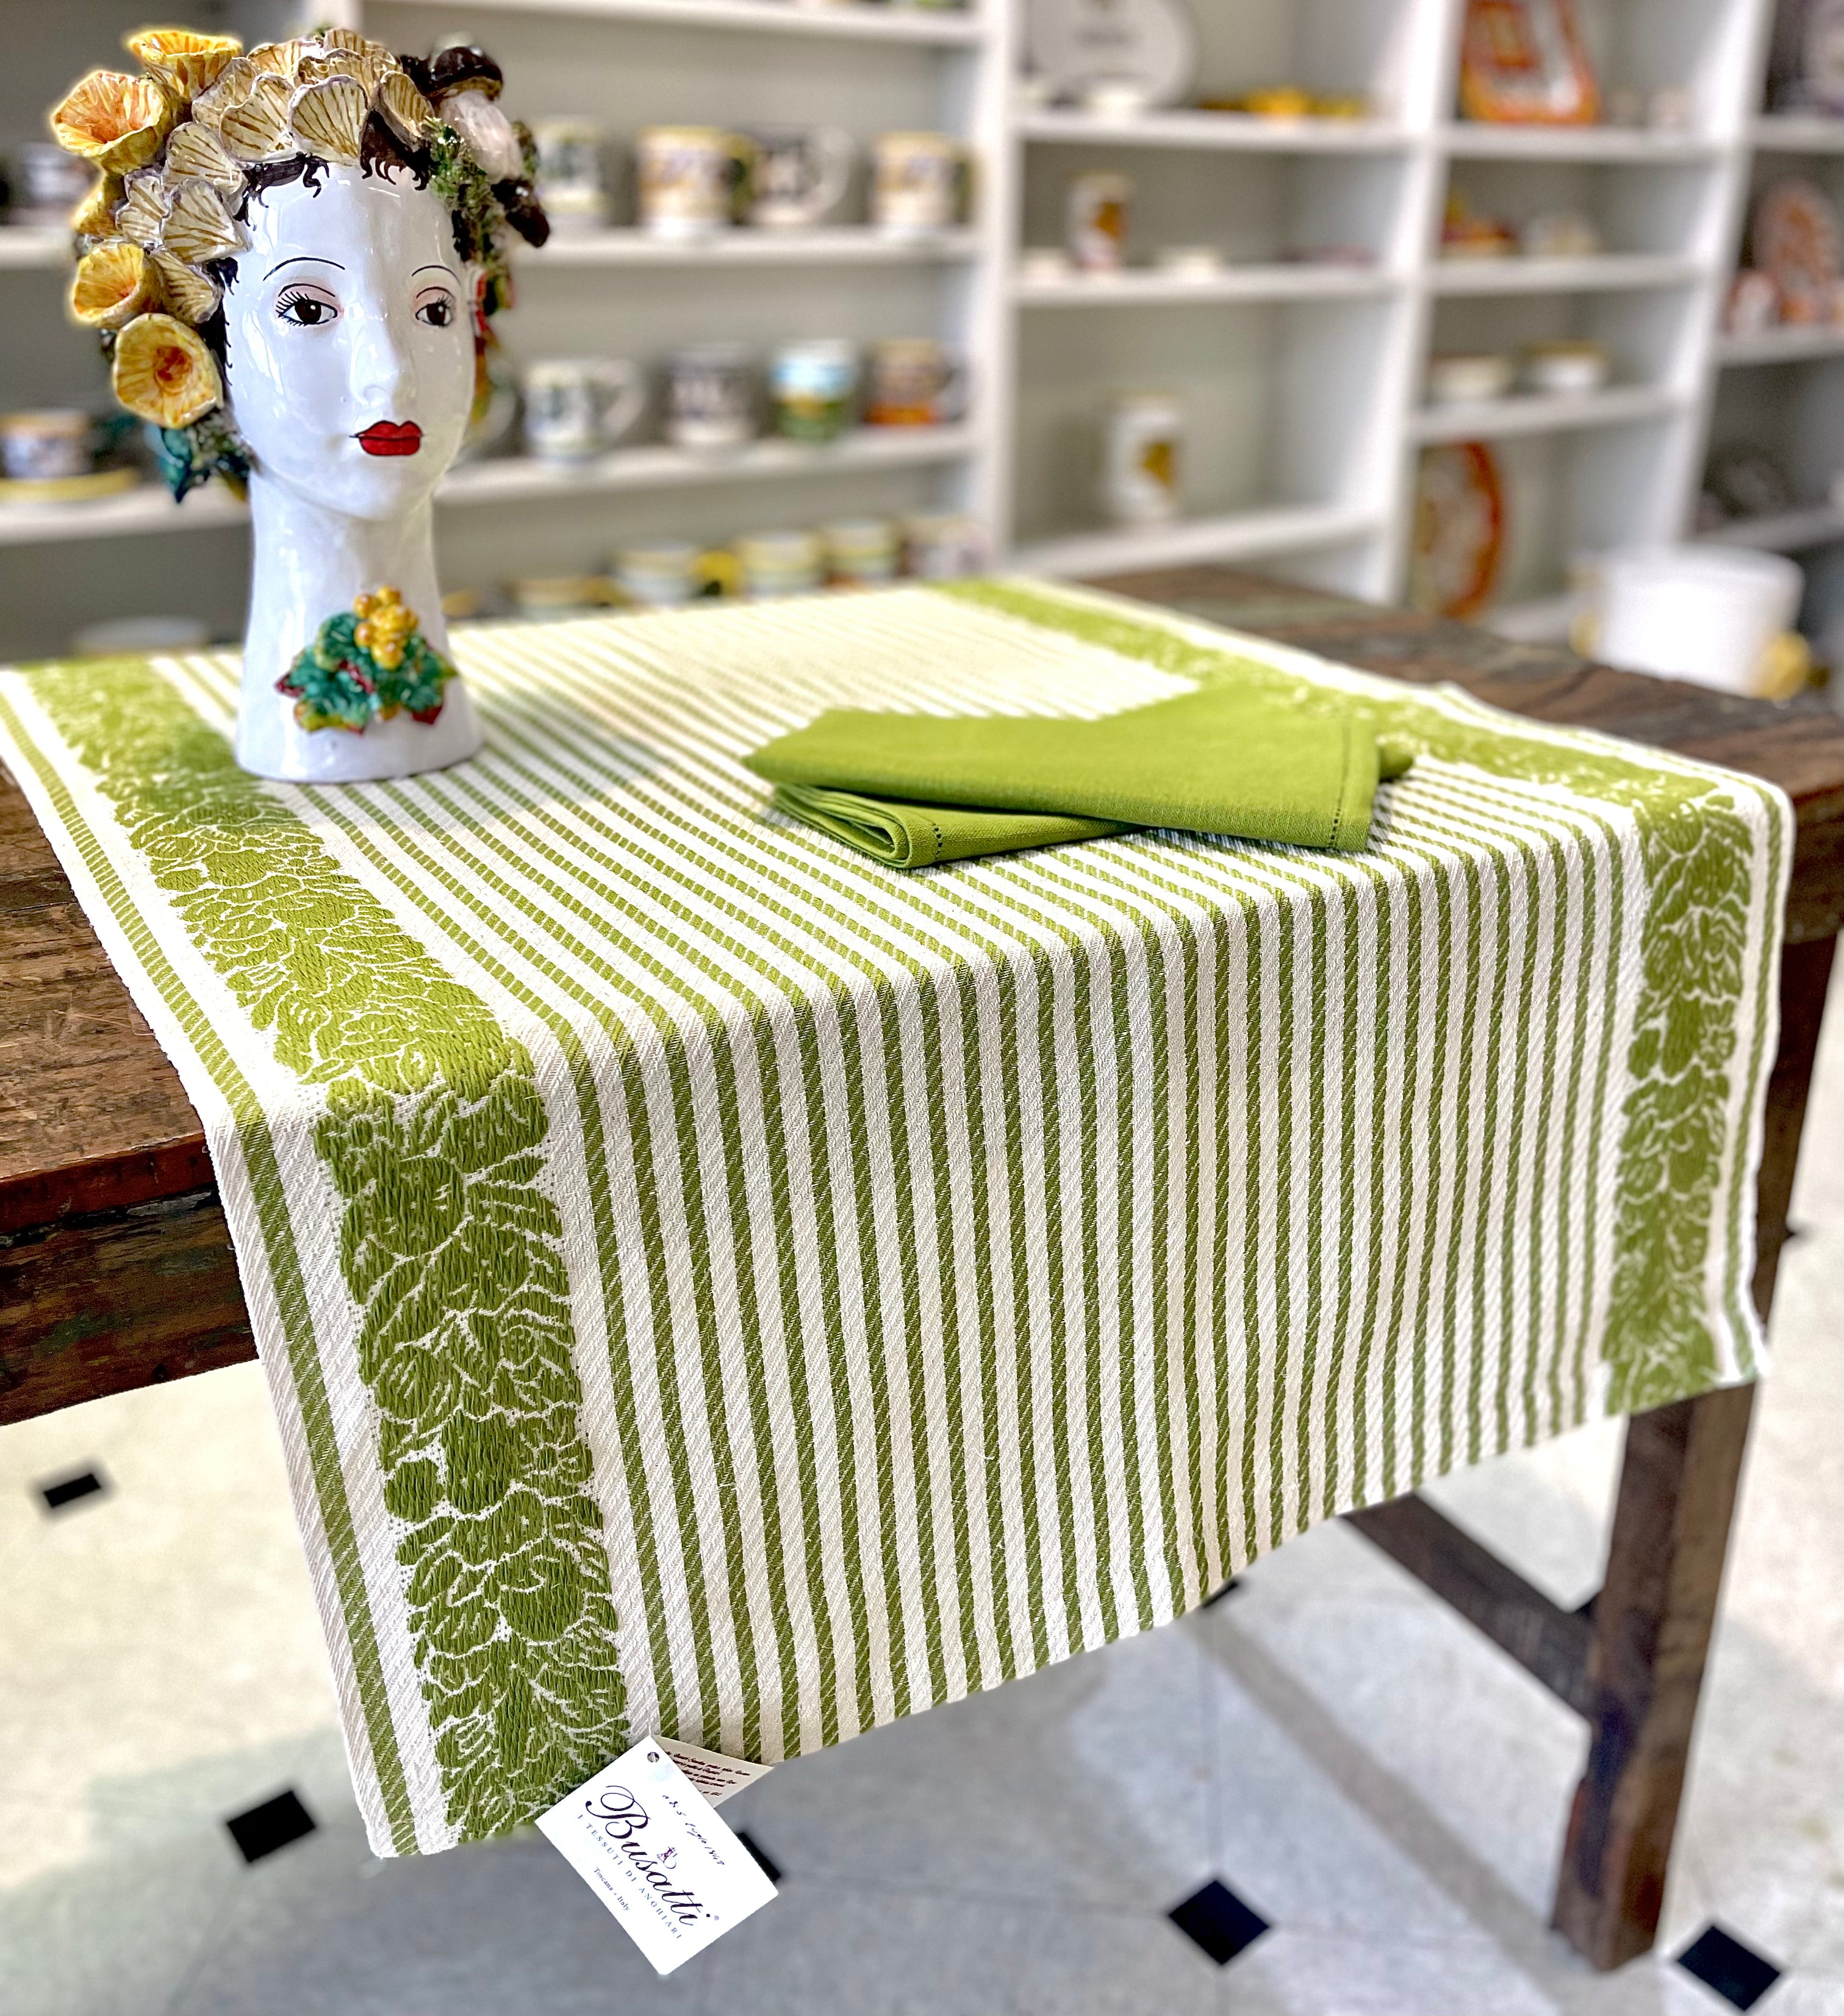 Buy Busatti Kitchen Towel Thick Stripe Design - Green & White at Biordi Art  Imports